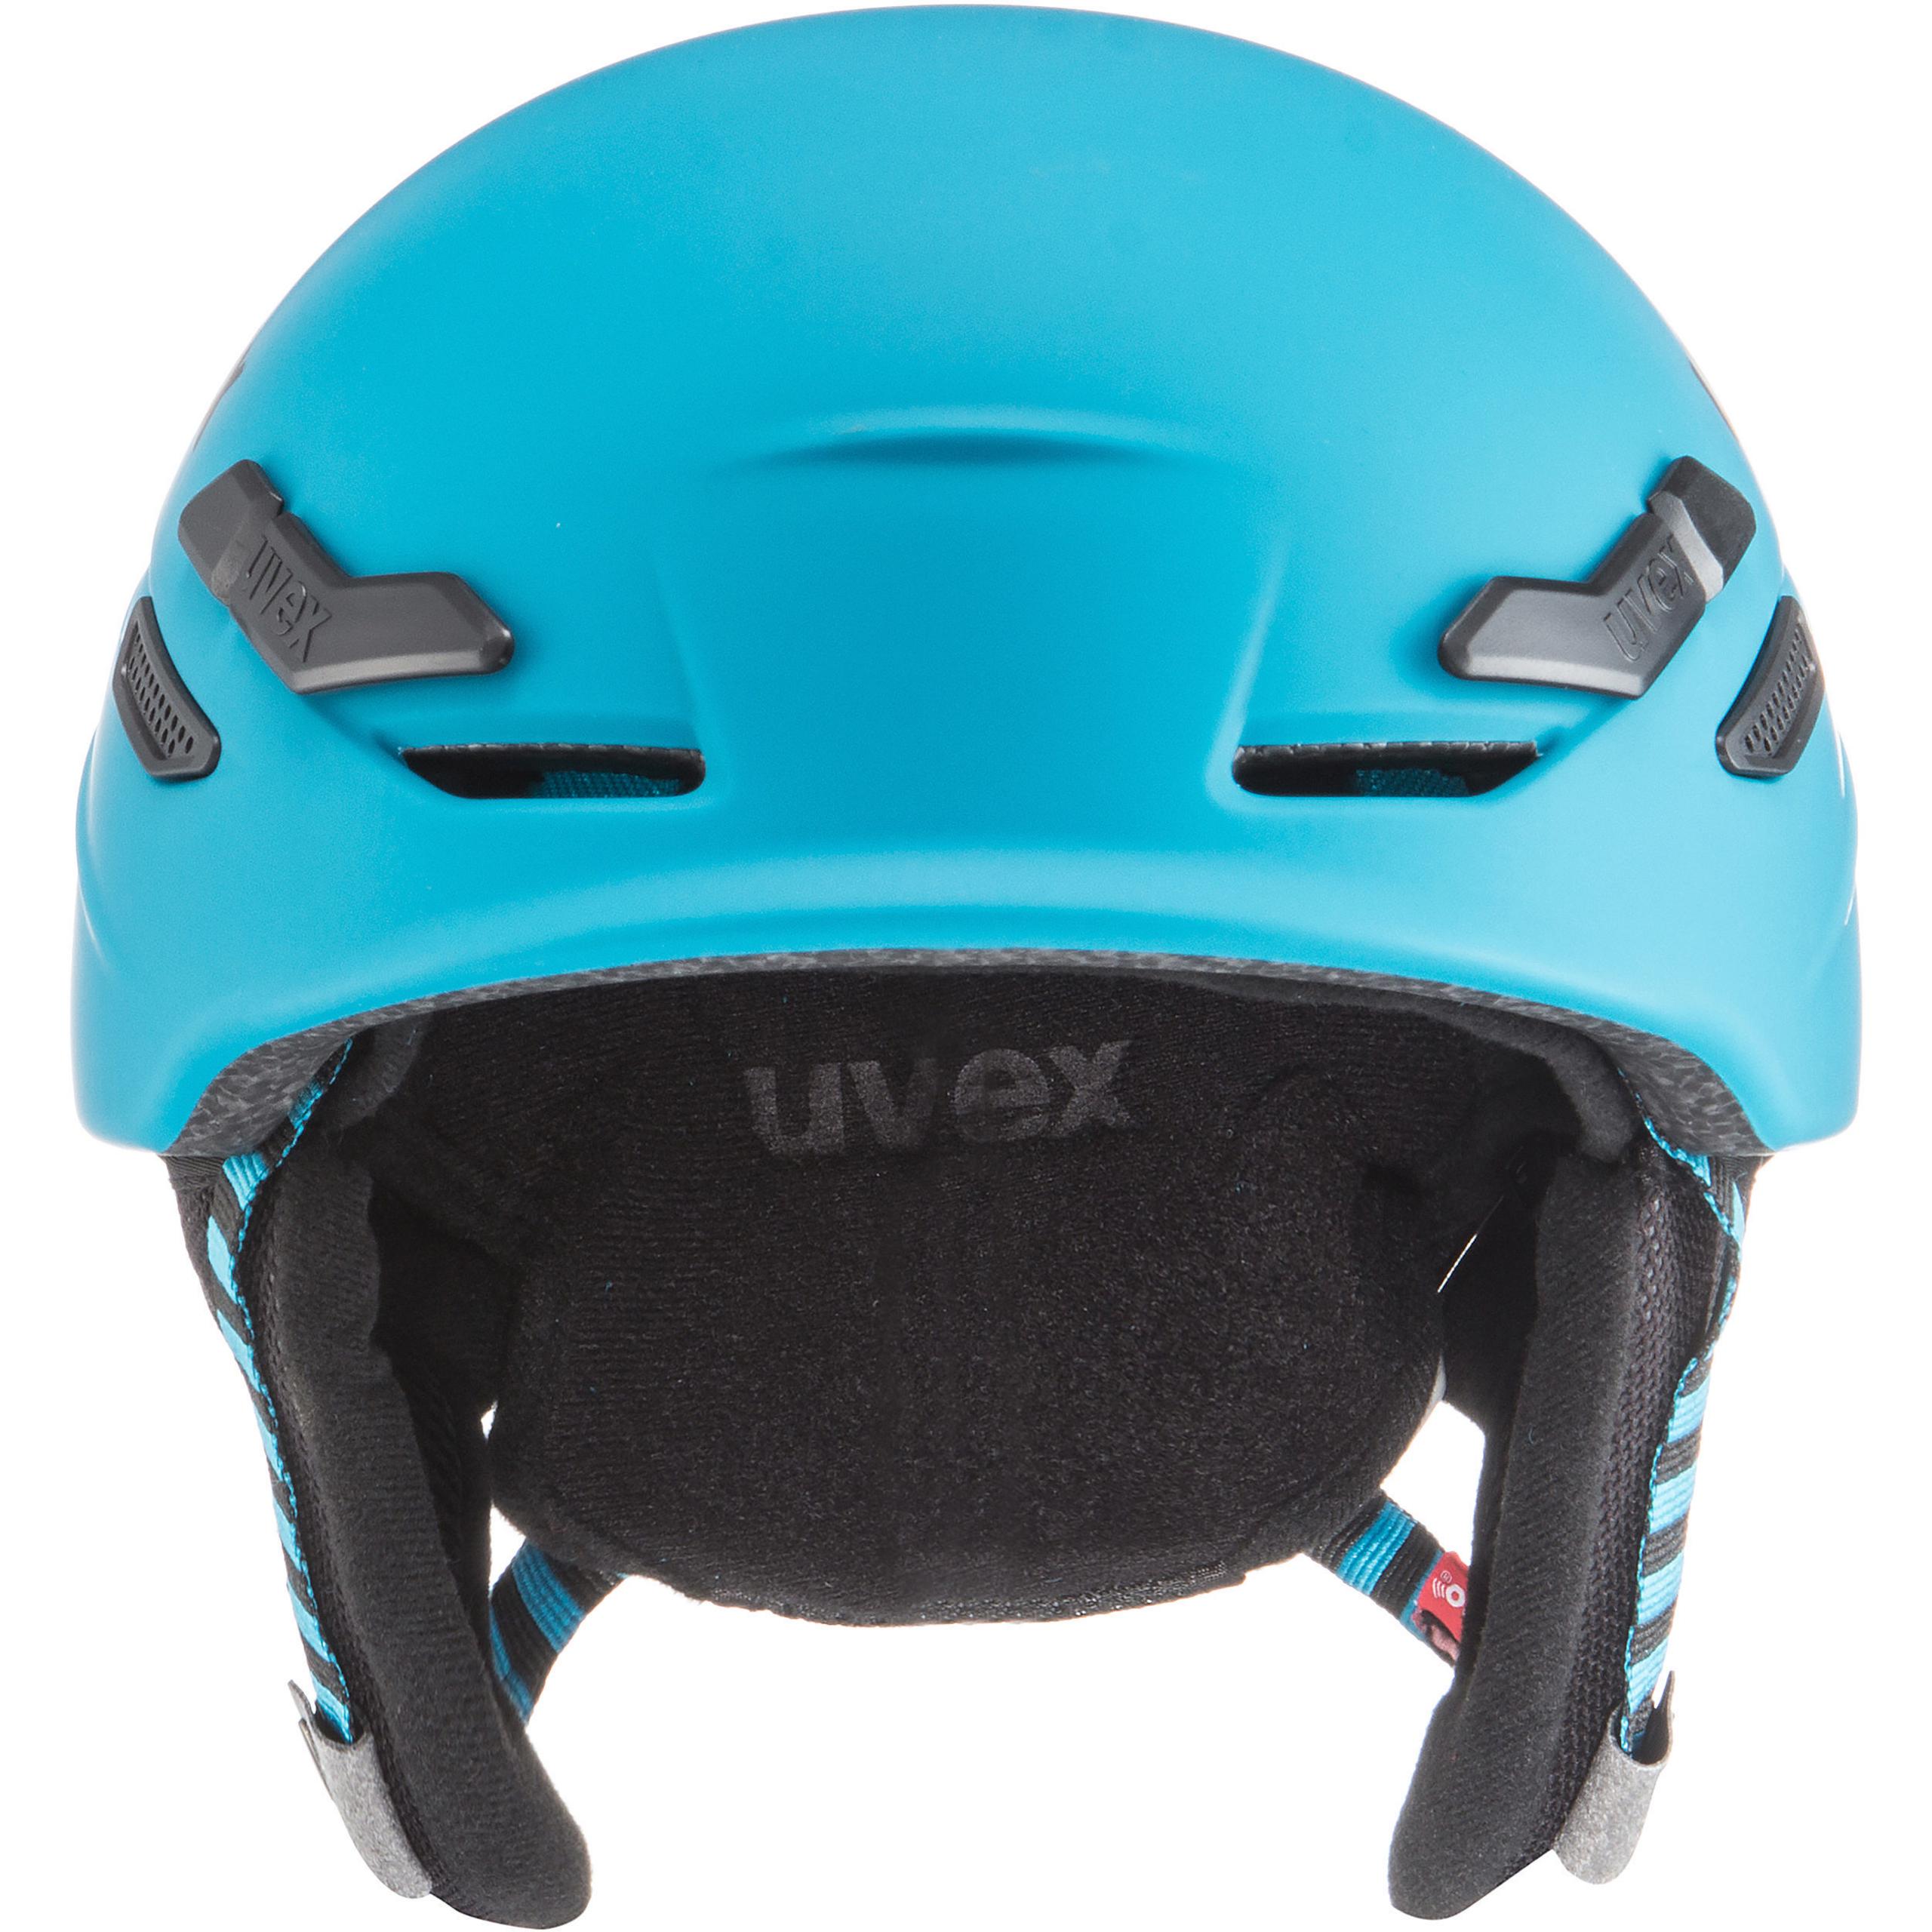 Uvex p.8000 Tour ski Allround Helmet Radhelm Climbing Helmet Safety Helmet S566204 